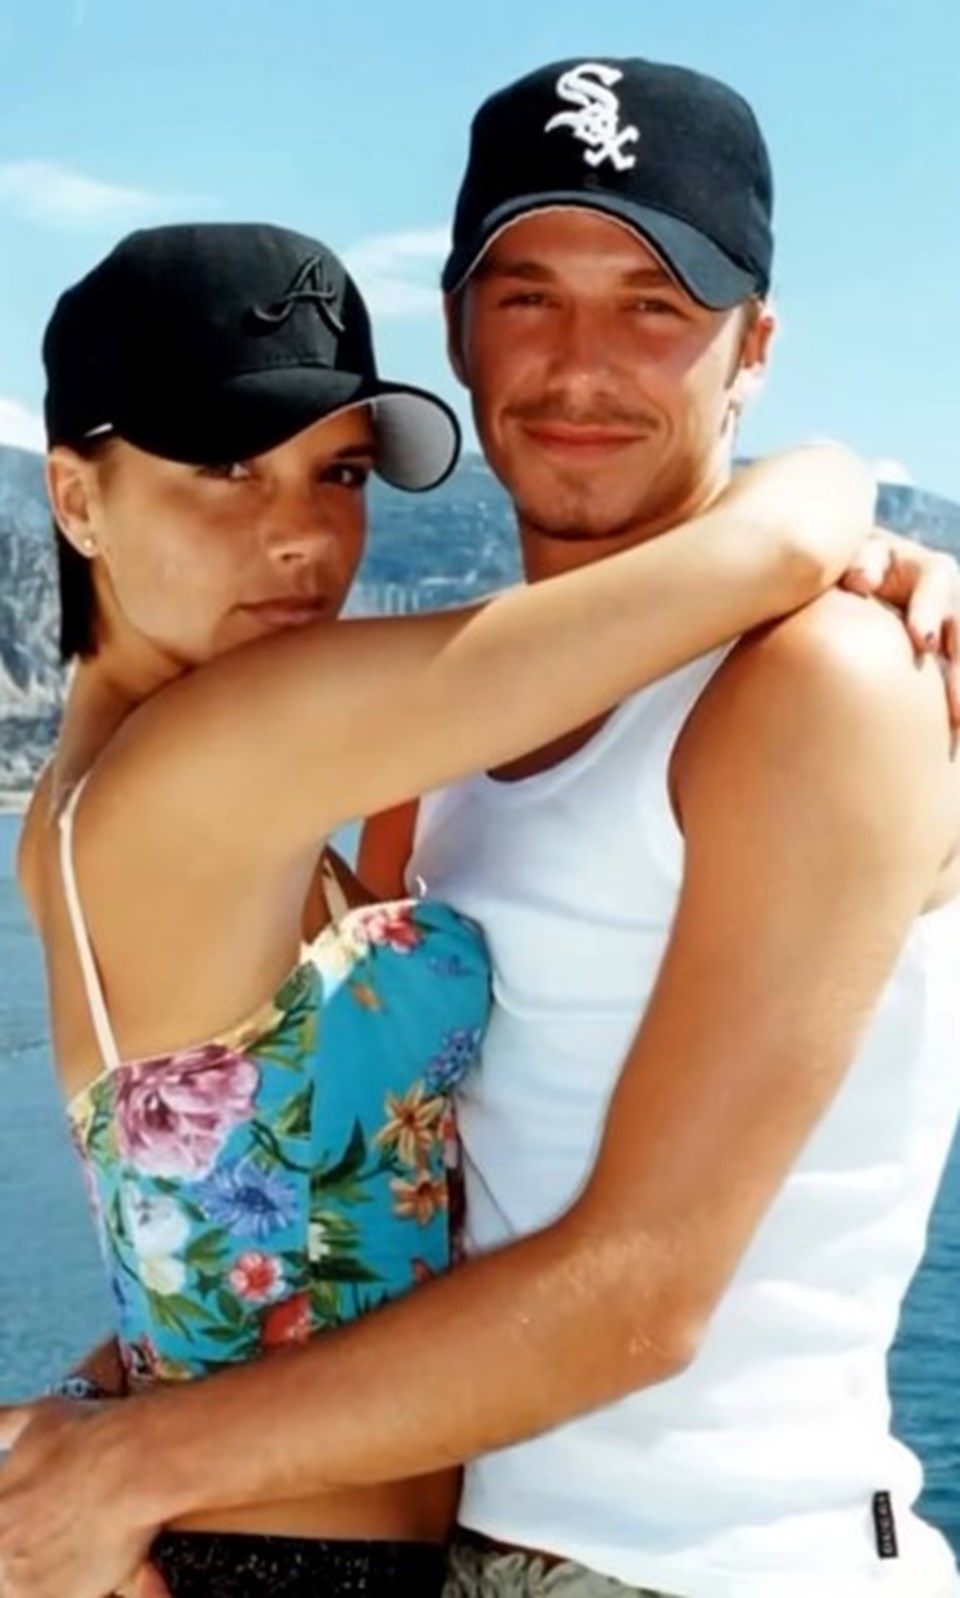 From David Beckham to Victoria Beckham: Happy birthday to my beautiful wife - 2